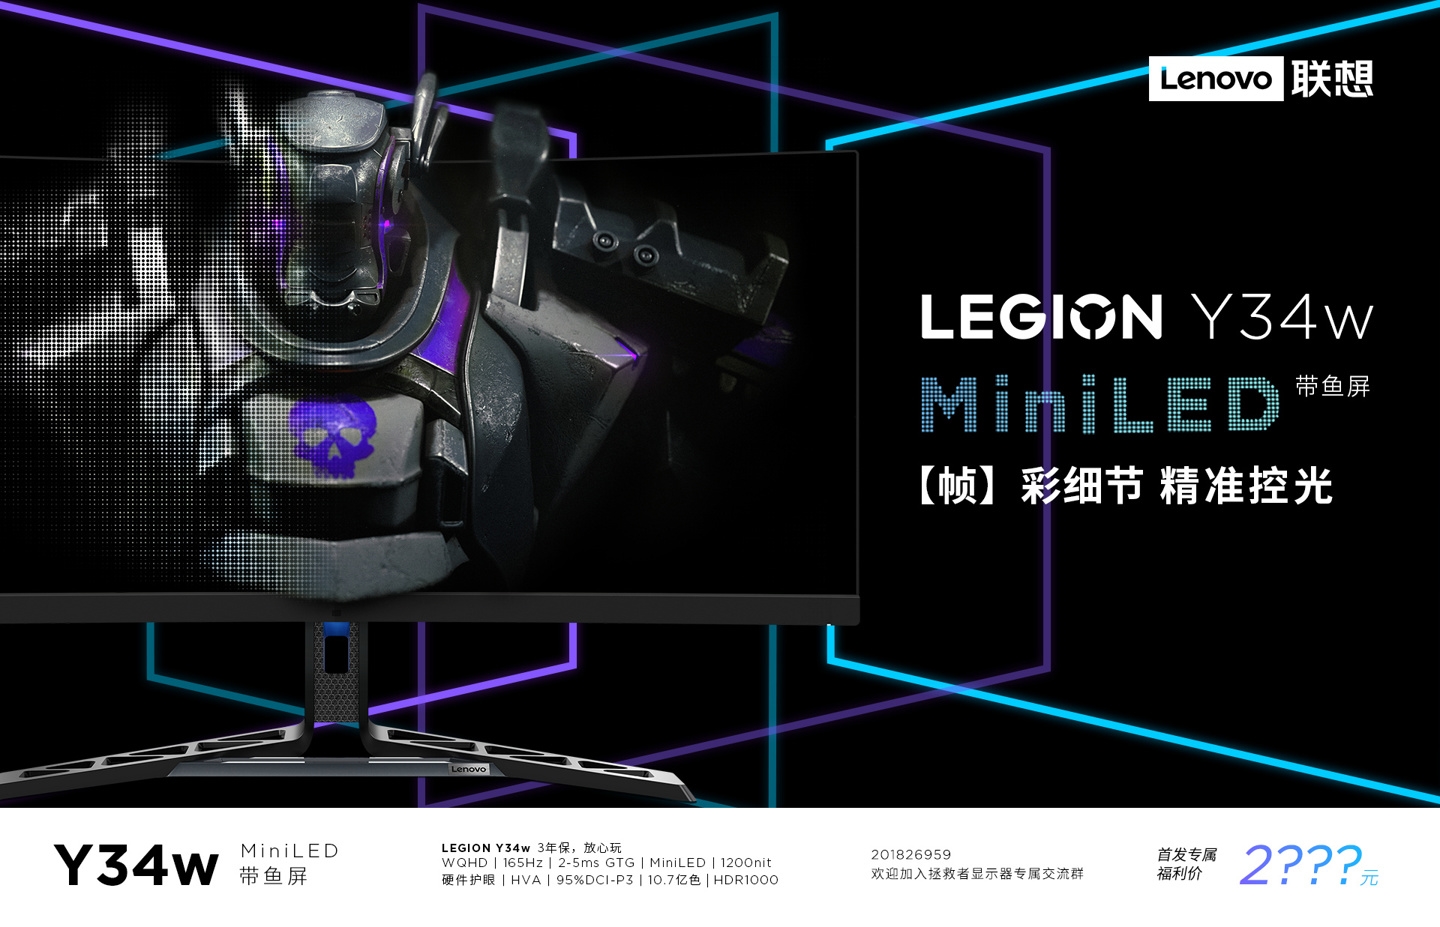 Lenovo Legion Y34w